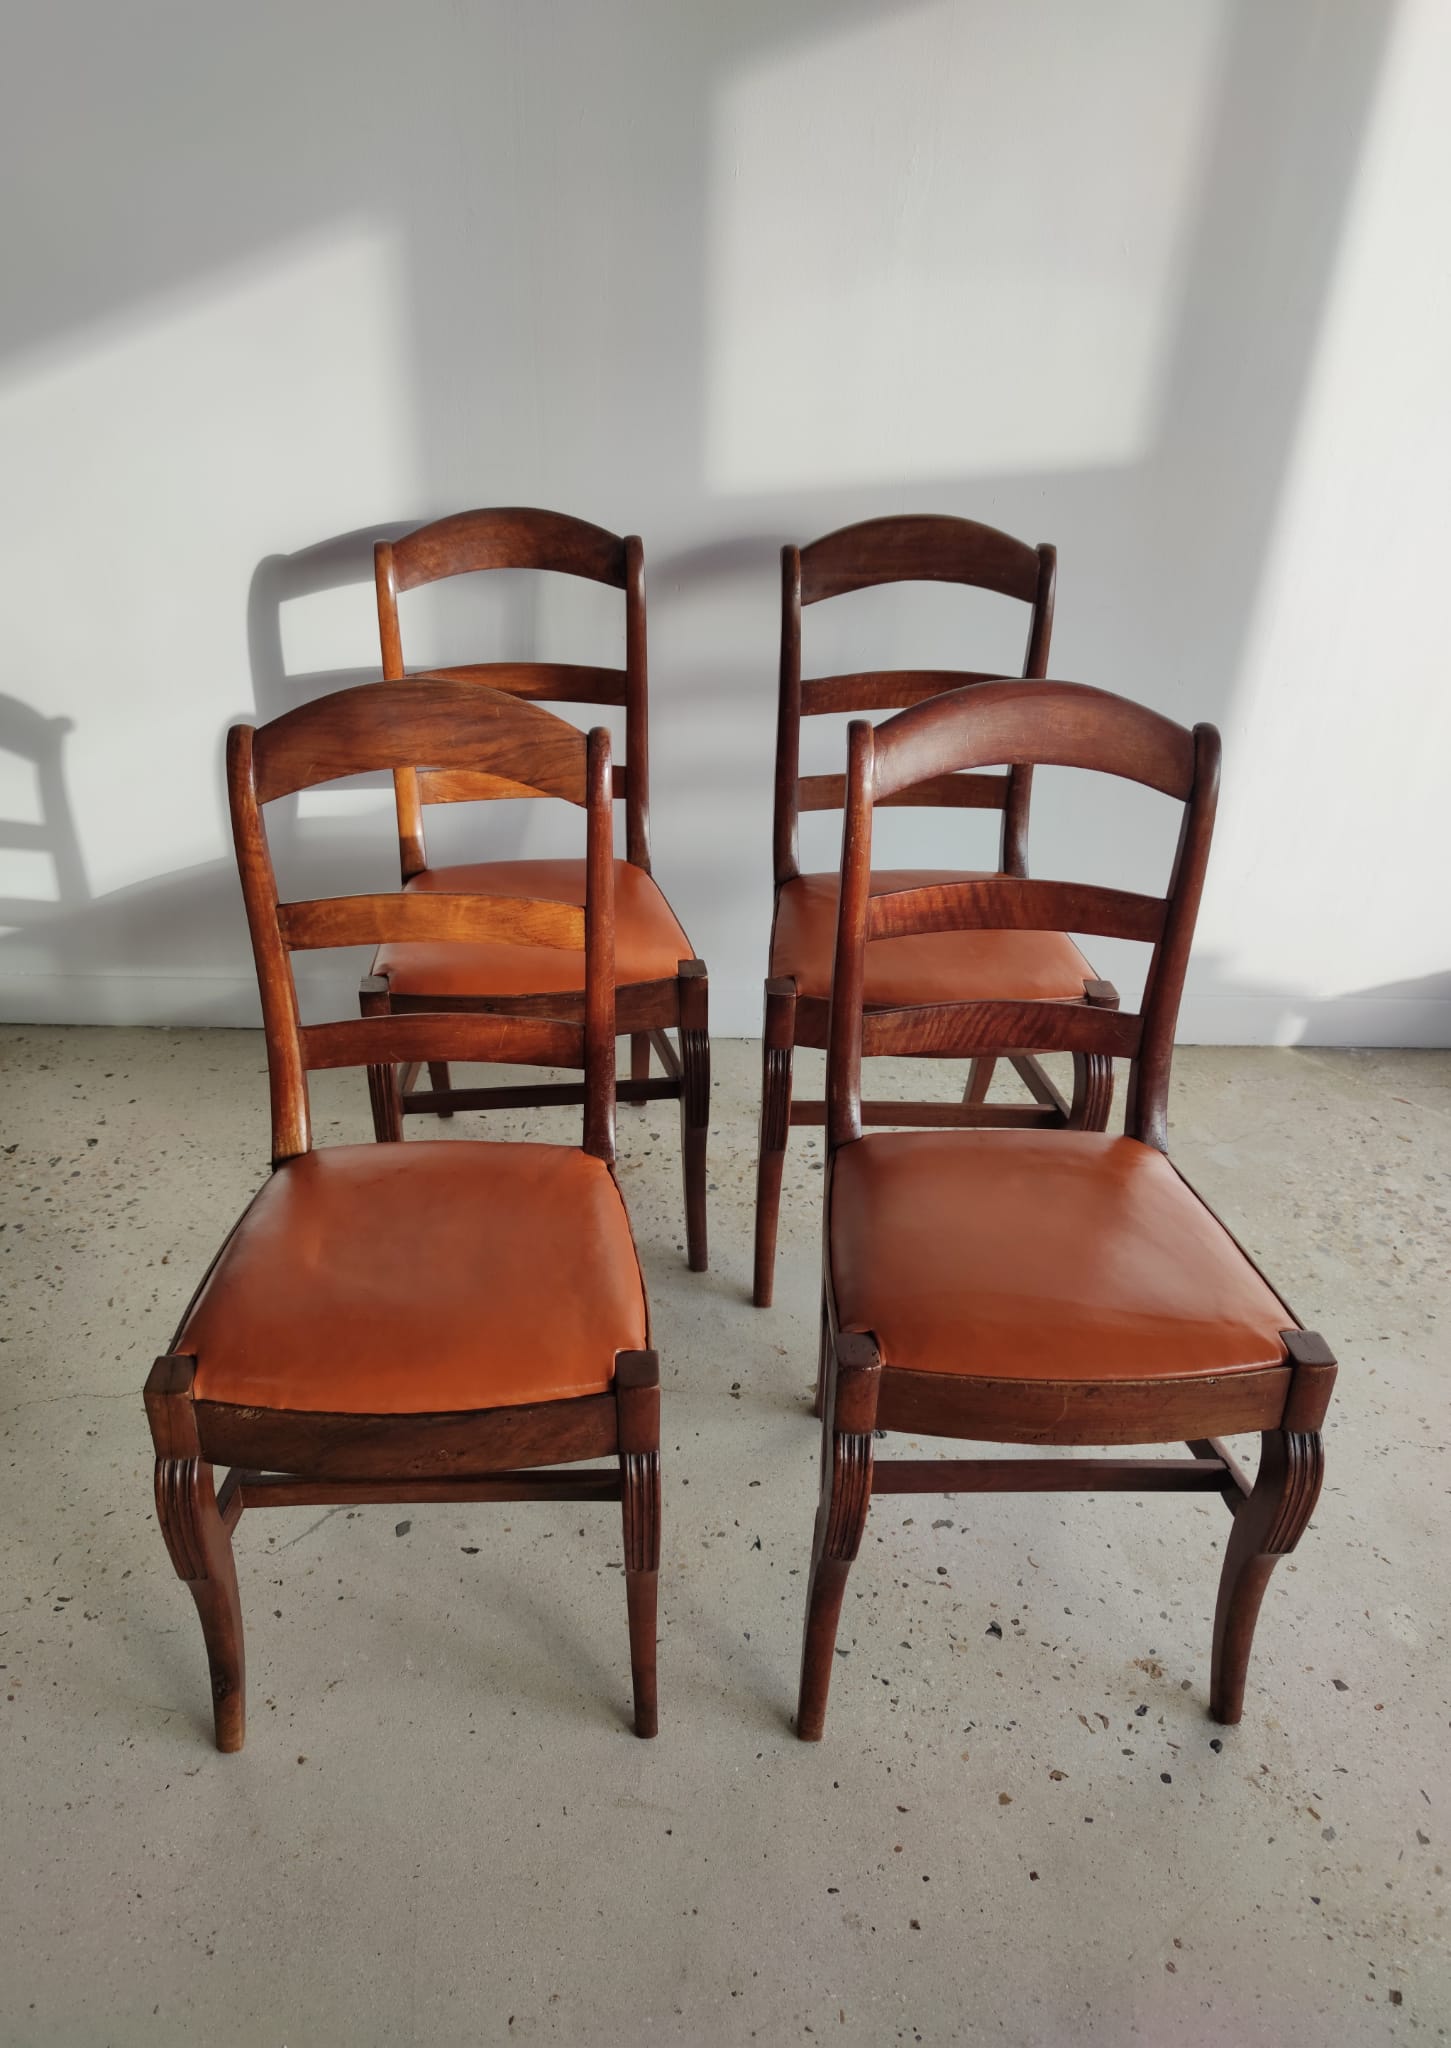 Chaise en bois naturel garniture orange